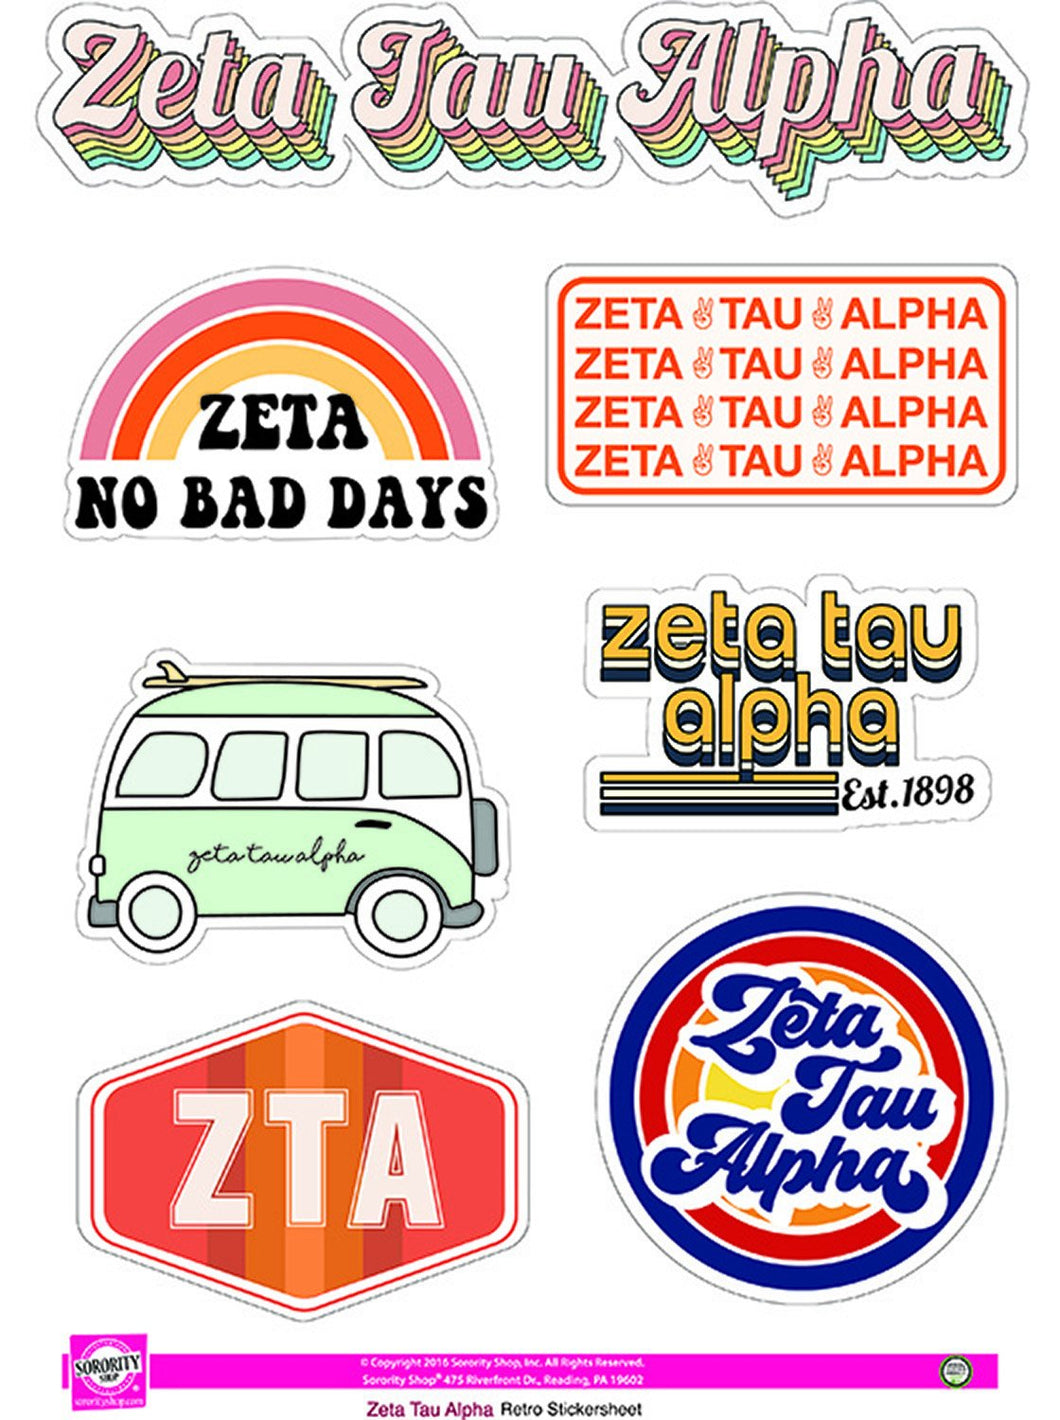 Retro Sticker Sheet - Zeta Tau Alpha